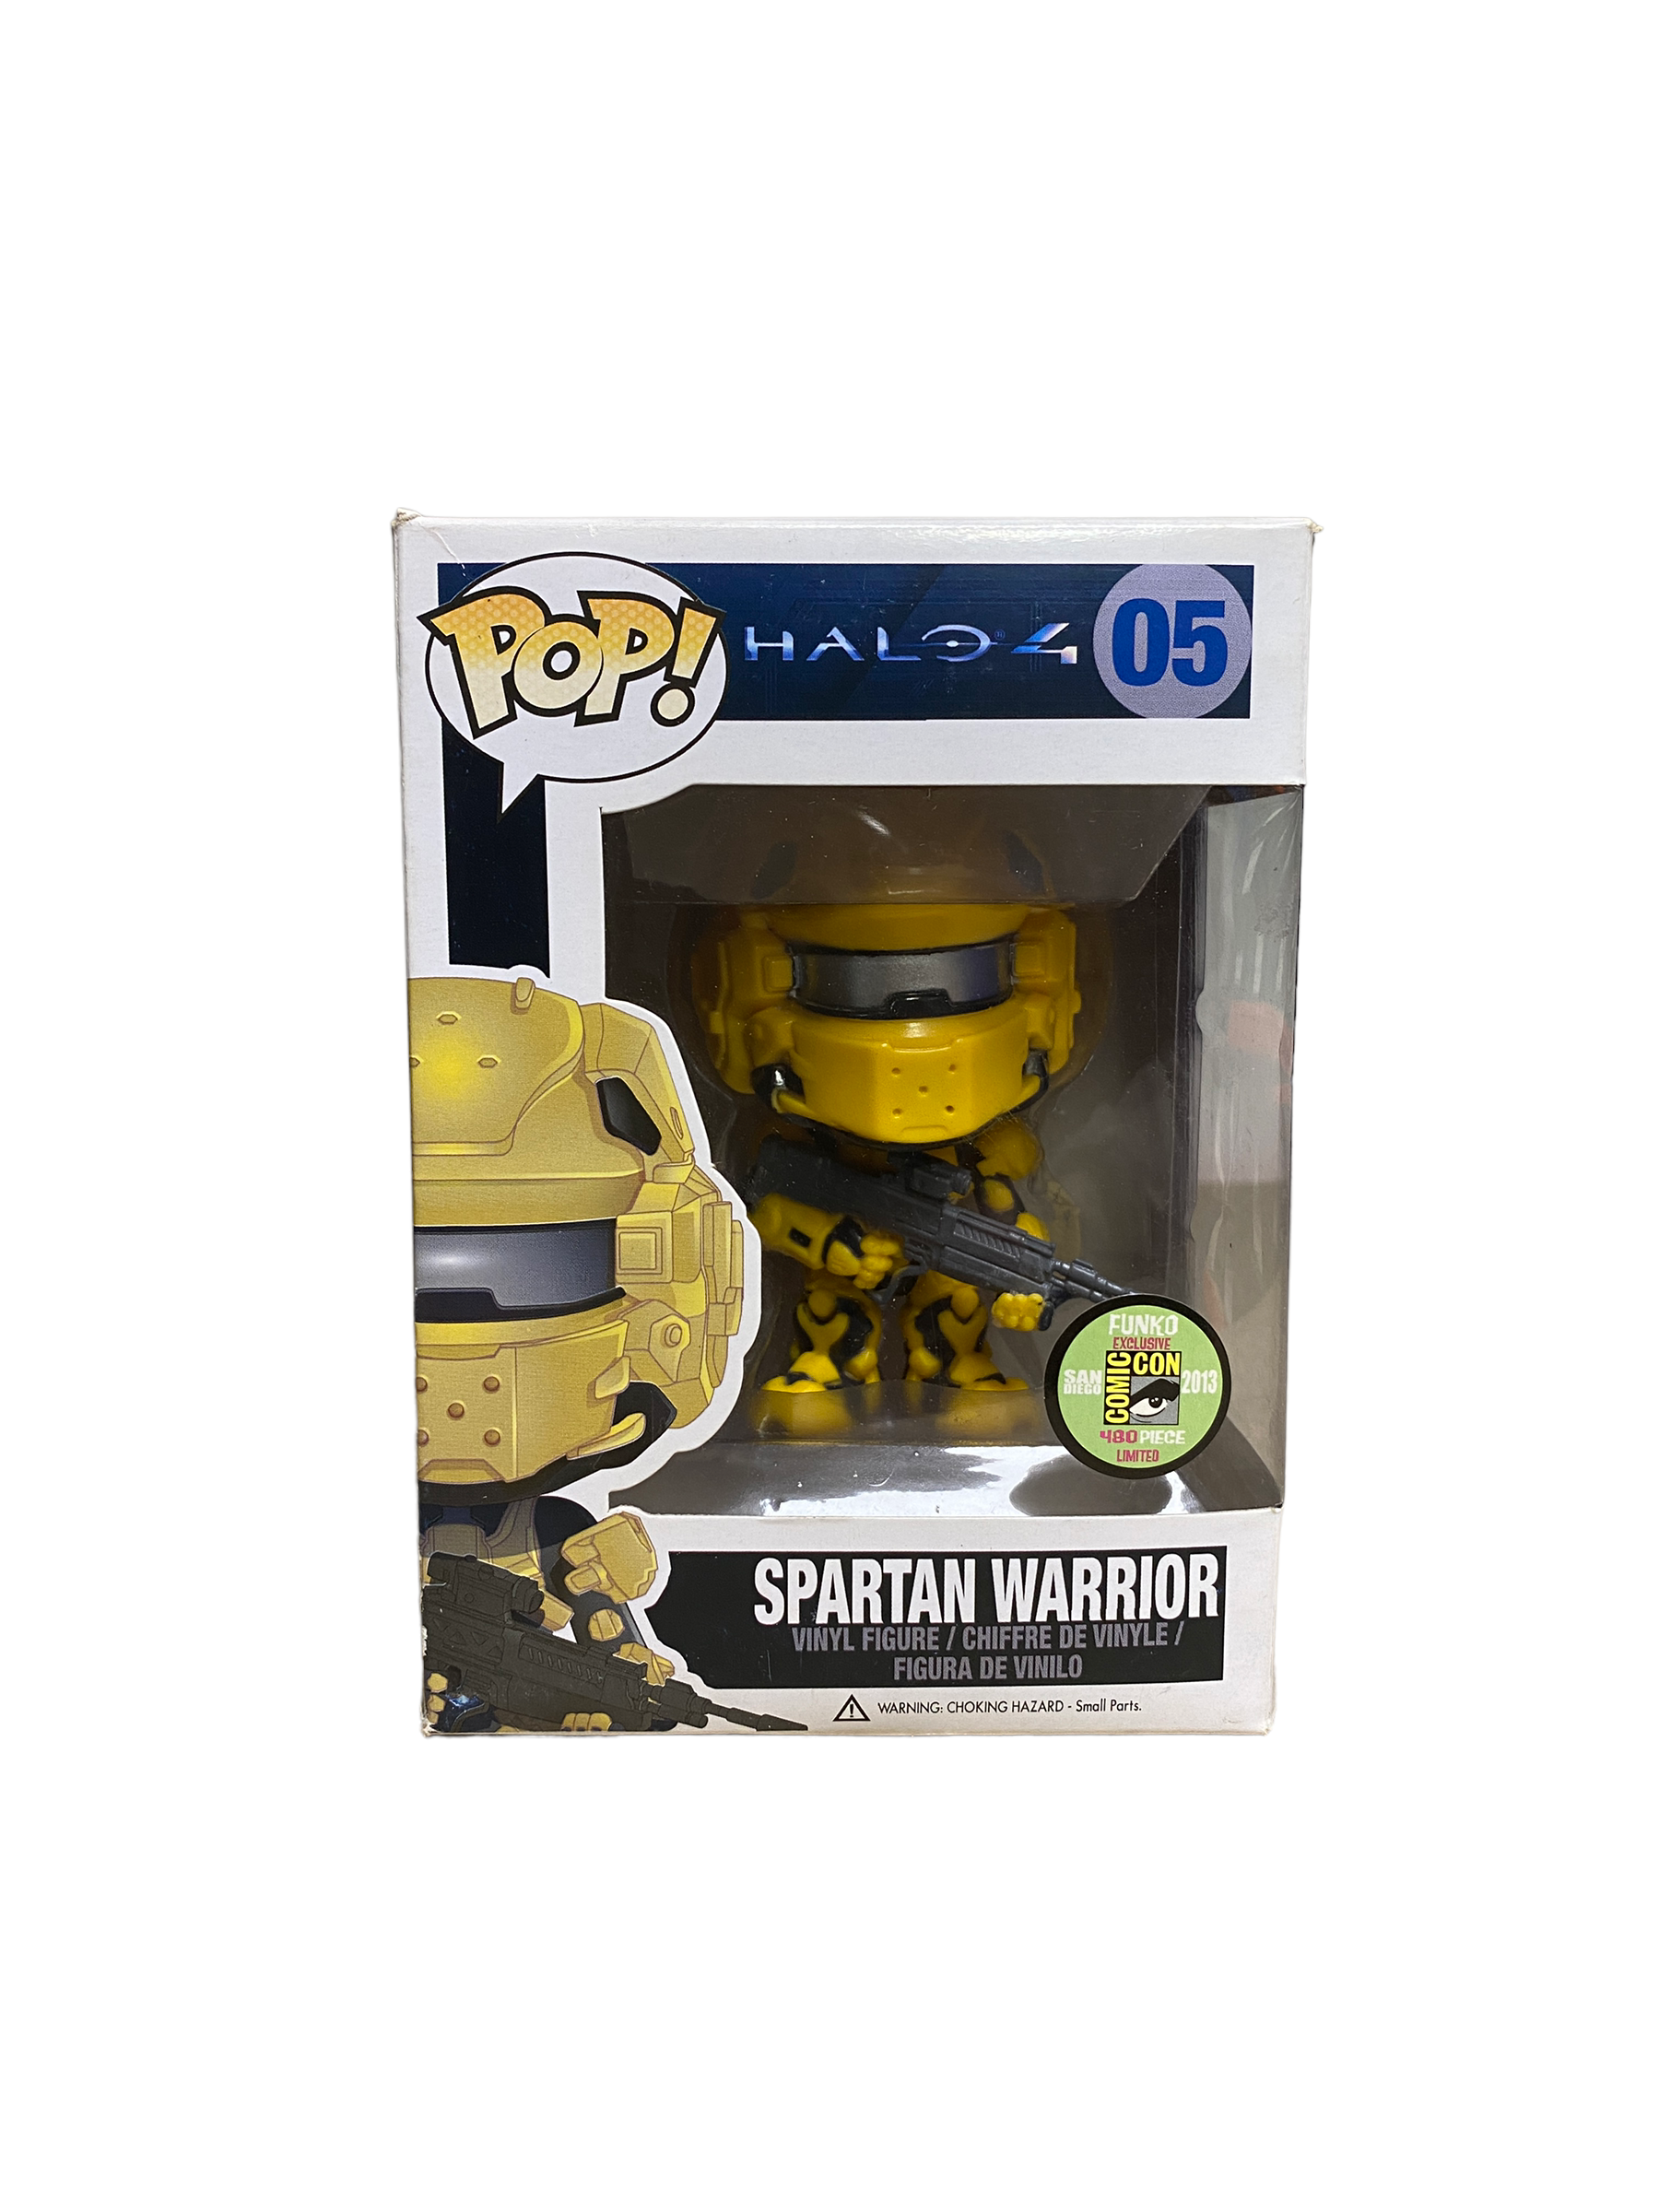 Spartan Warrior #05 (Yellow) Funko Pop! - HALO 4 - SDCC 2013 Exclusive LE480 Pcs - Condition 7/10